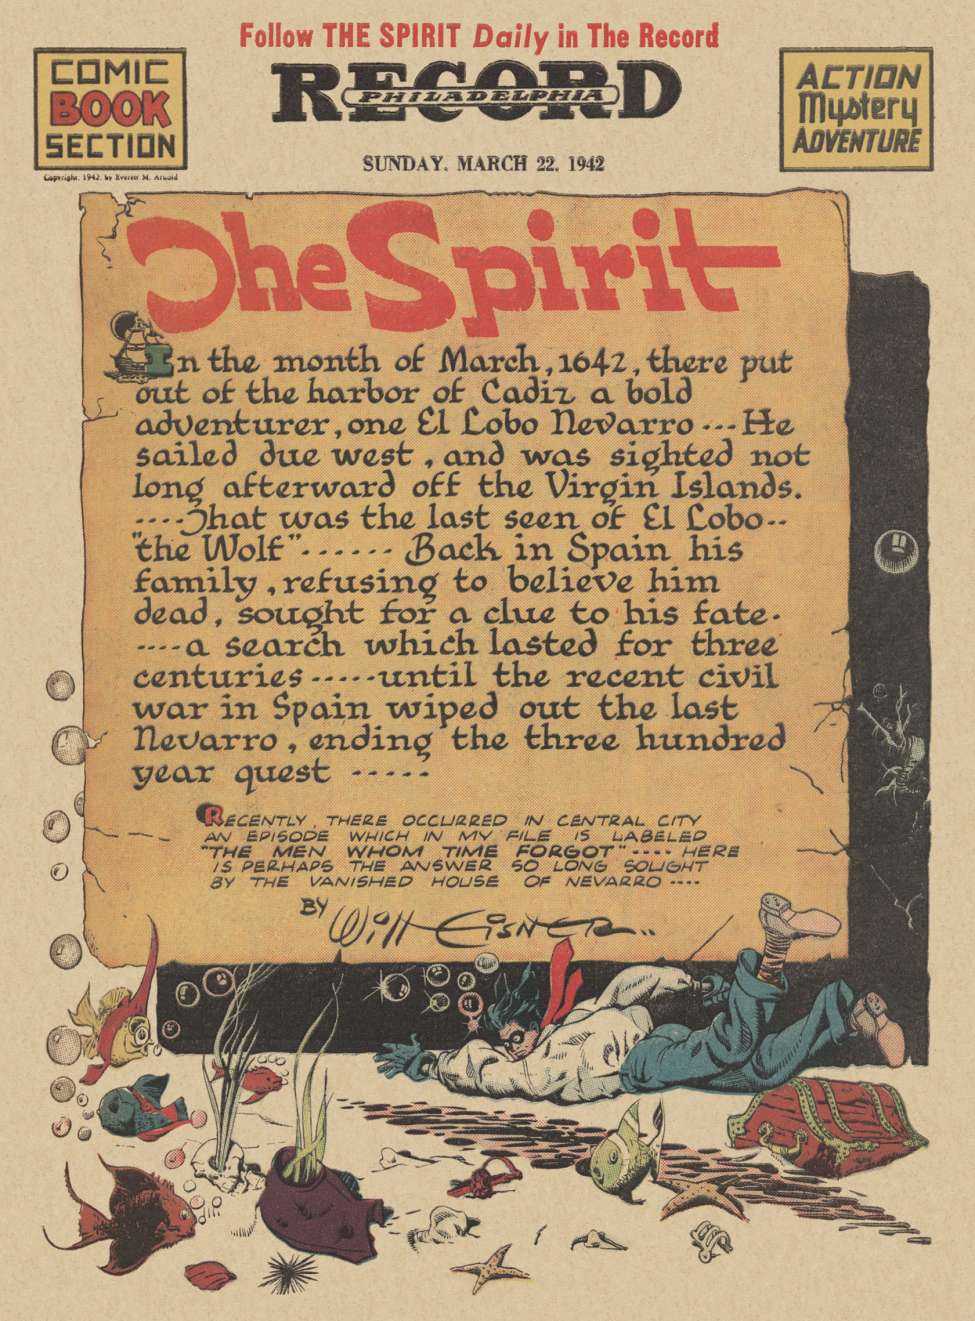 Book Cover For The Spirit (1942-03-22) - Philadelphia Record